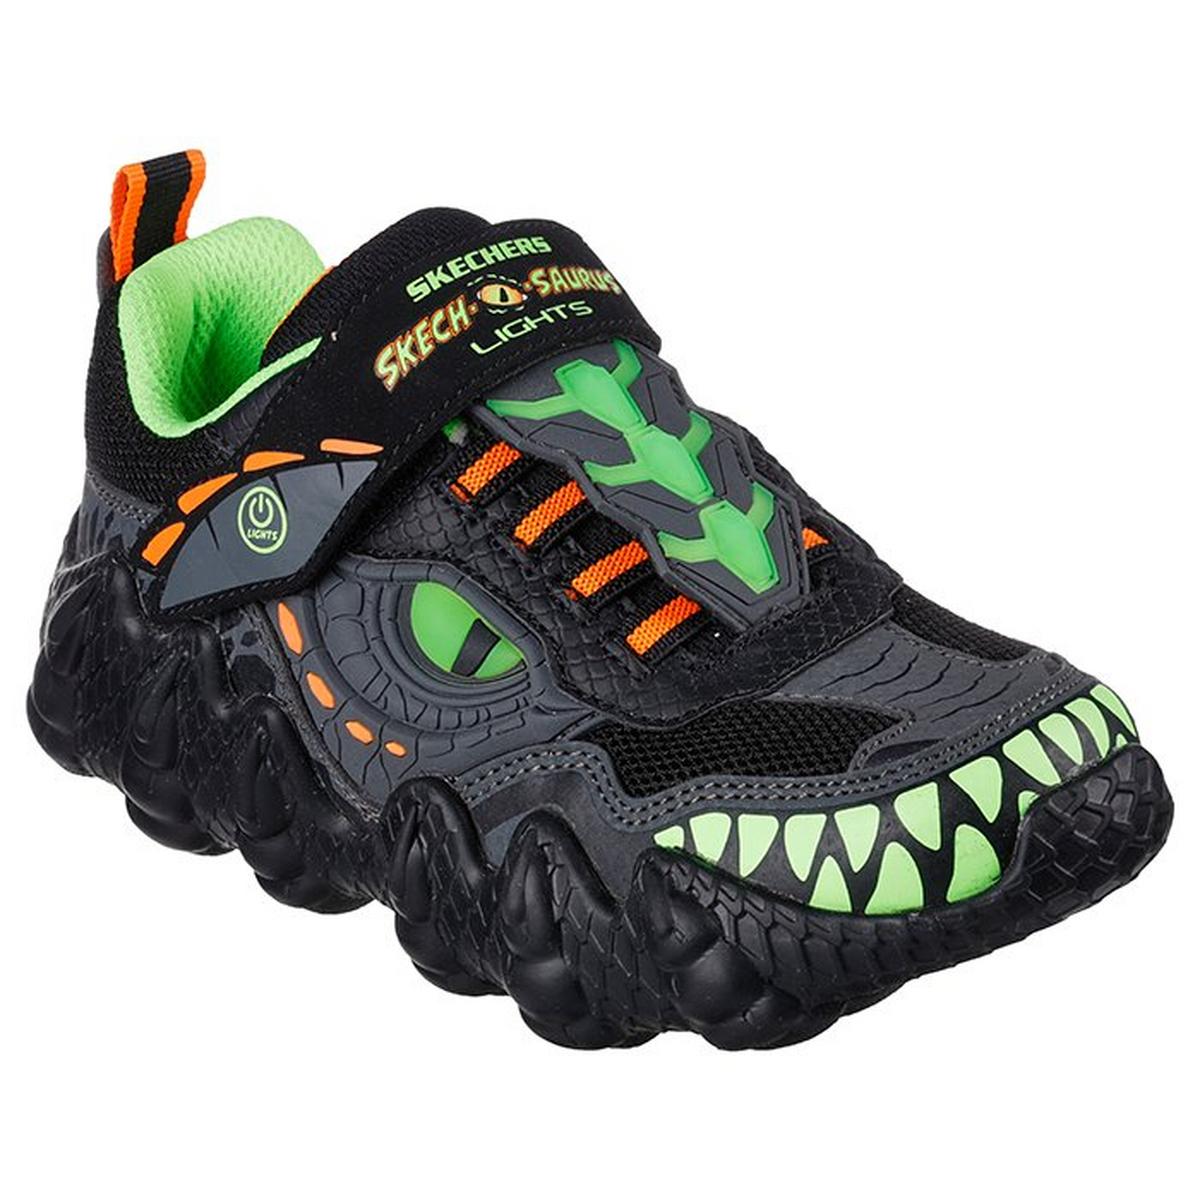 Chaussures Skech-O-Saurus Lights Dino-Tracker pour enfants [11-3]